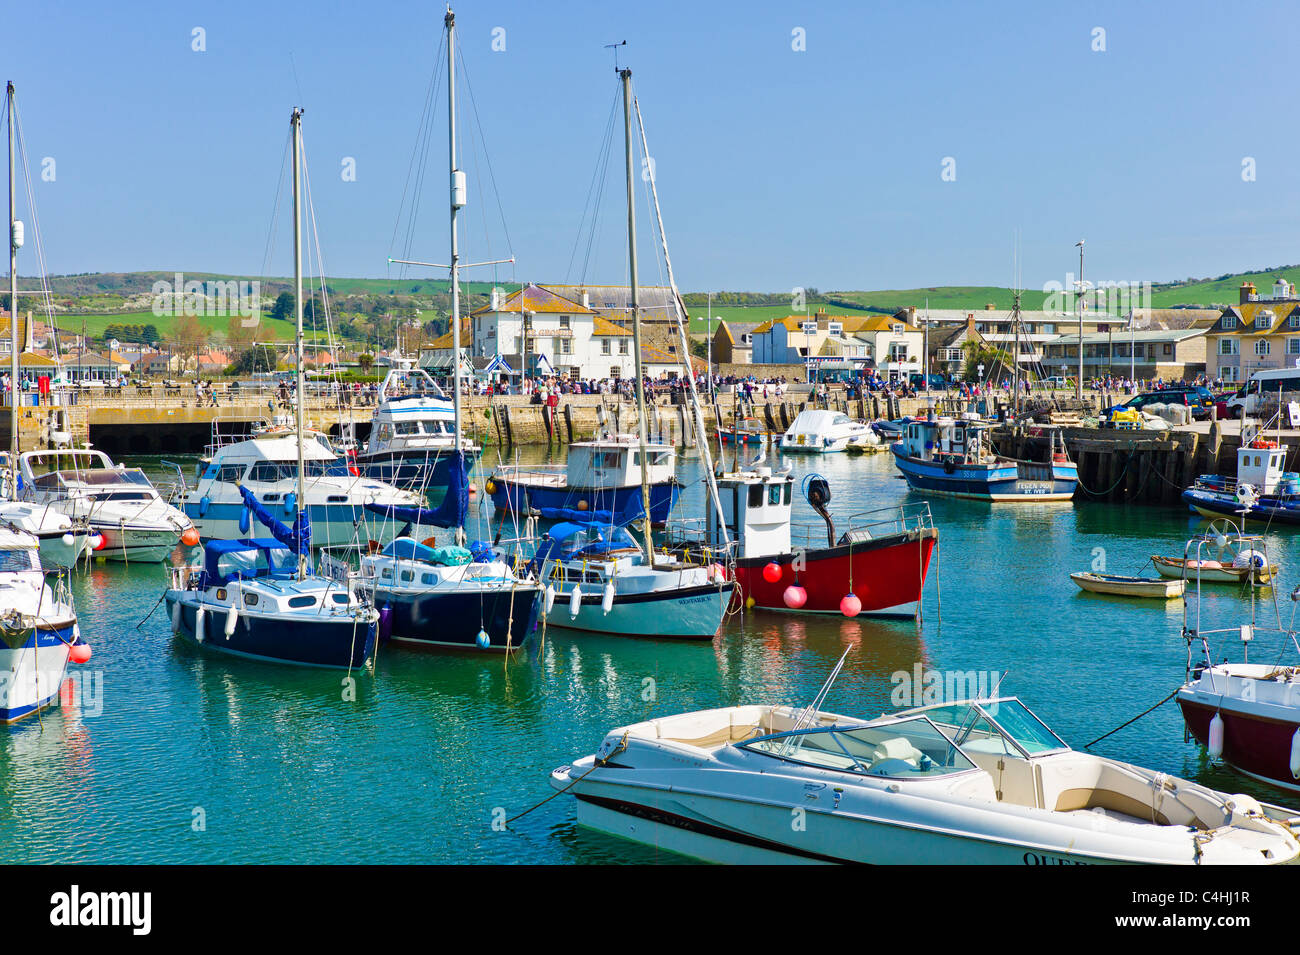 Harbour, West Bay, Dorset, UK Banque D'Images